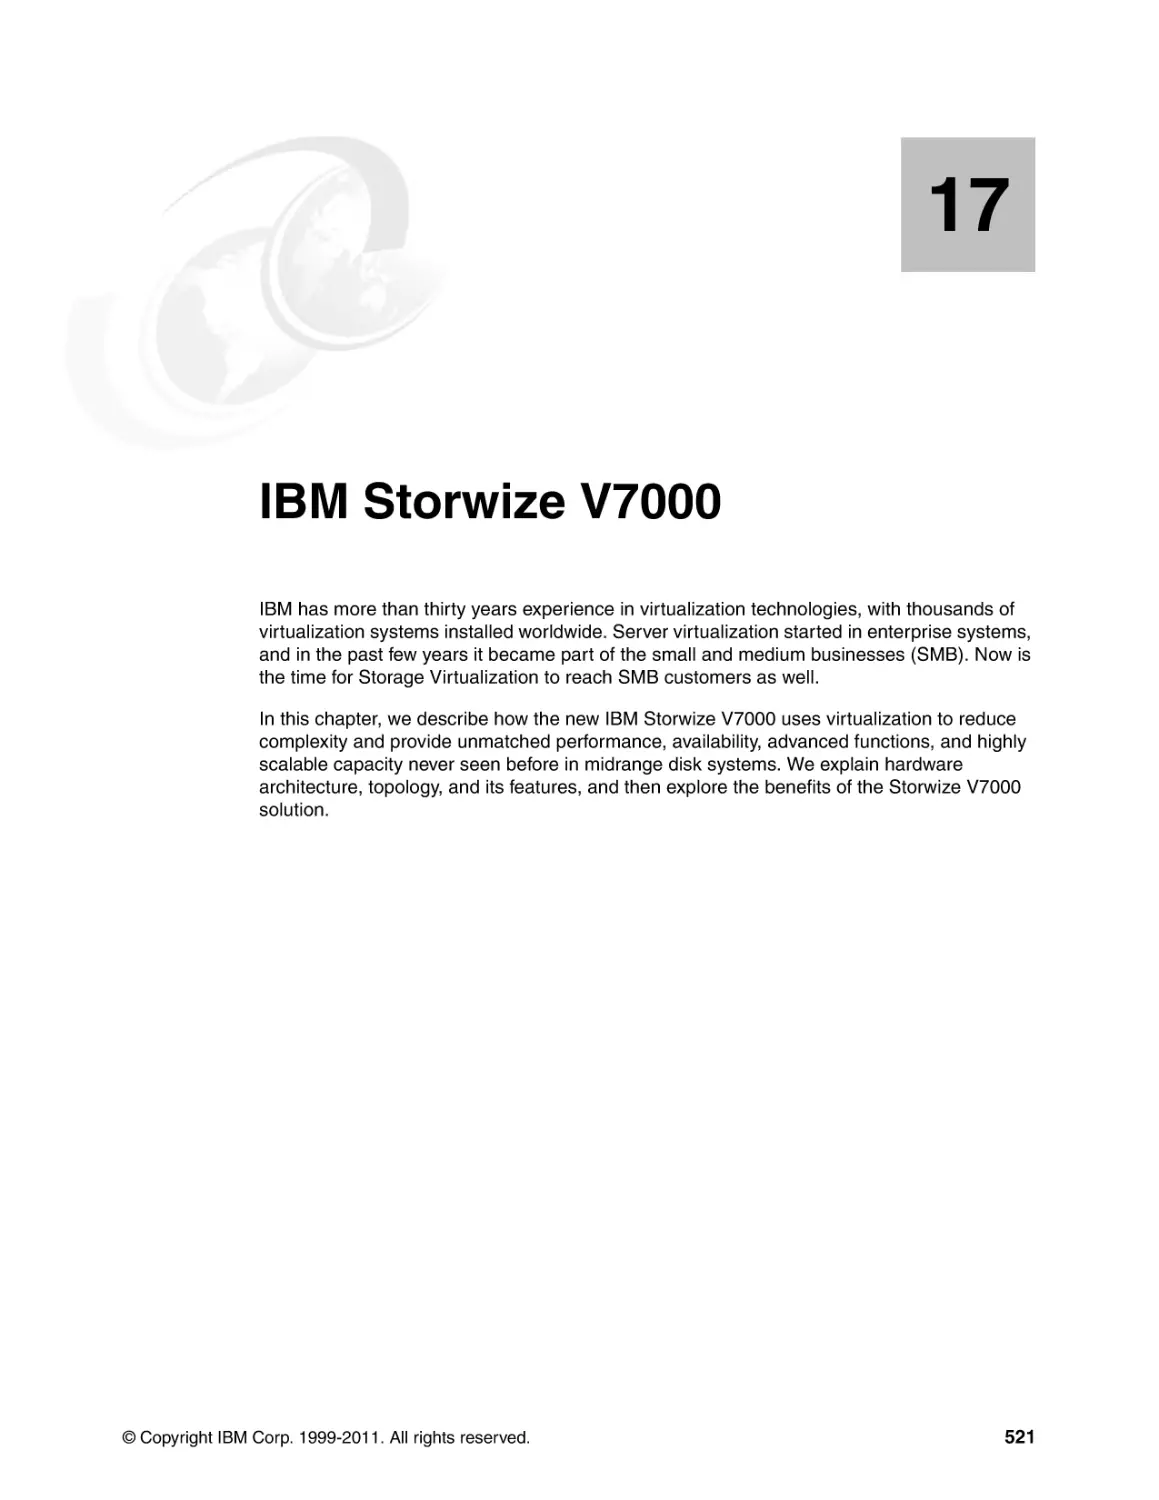 Chapter 17. IBM Storwize V7000